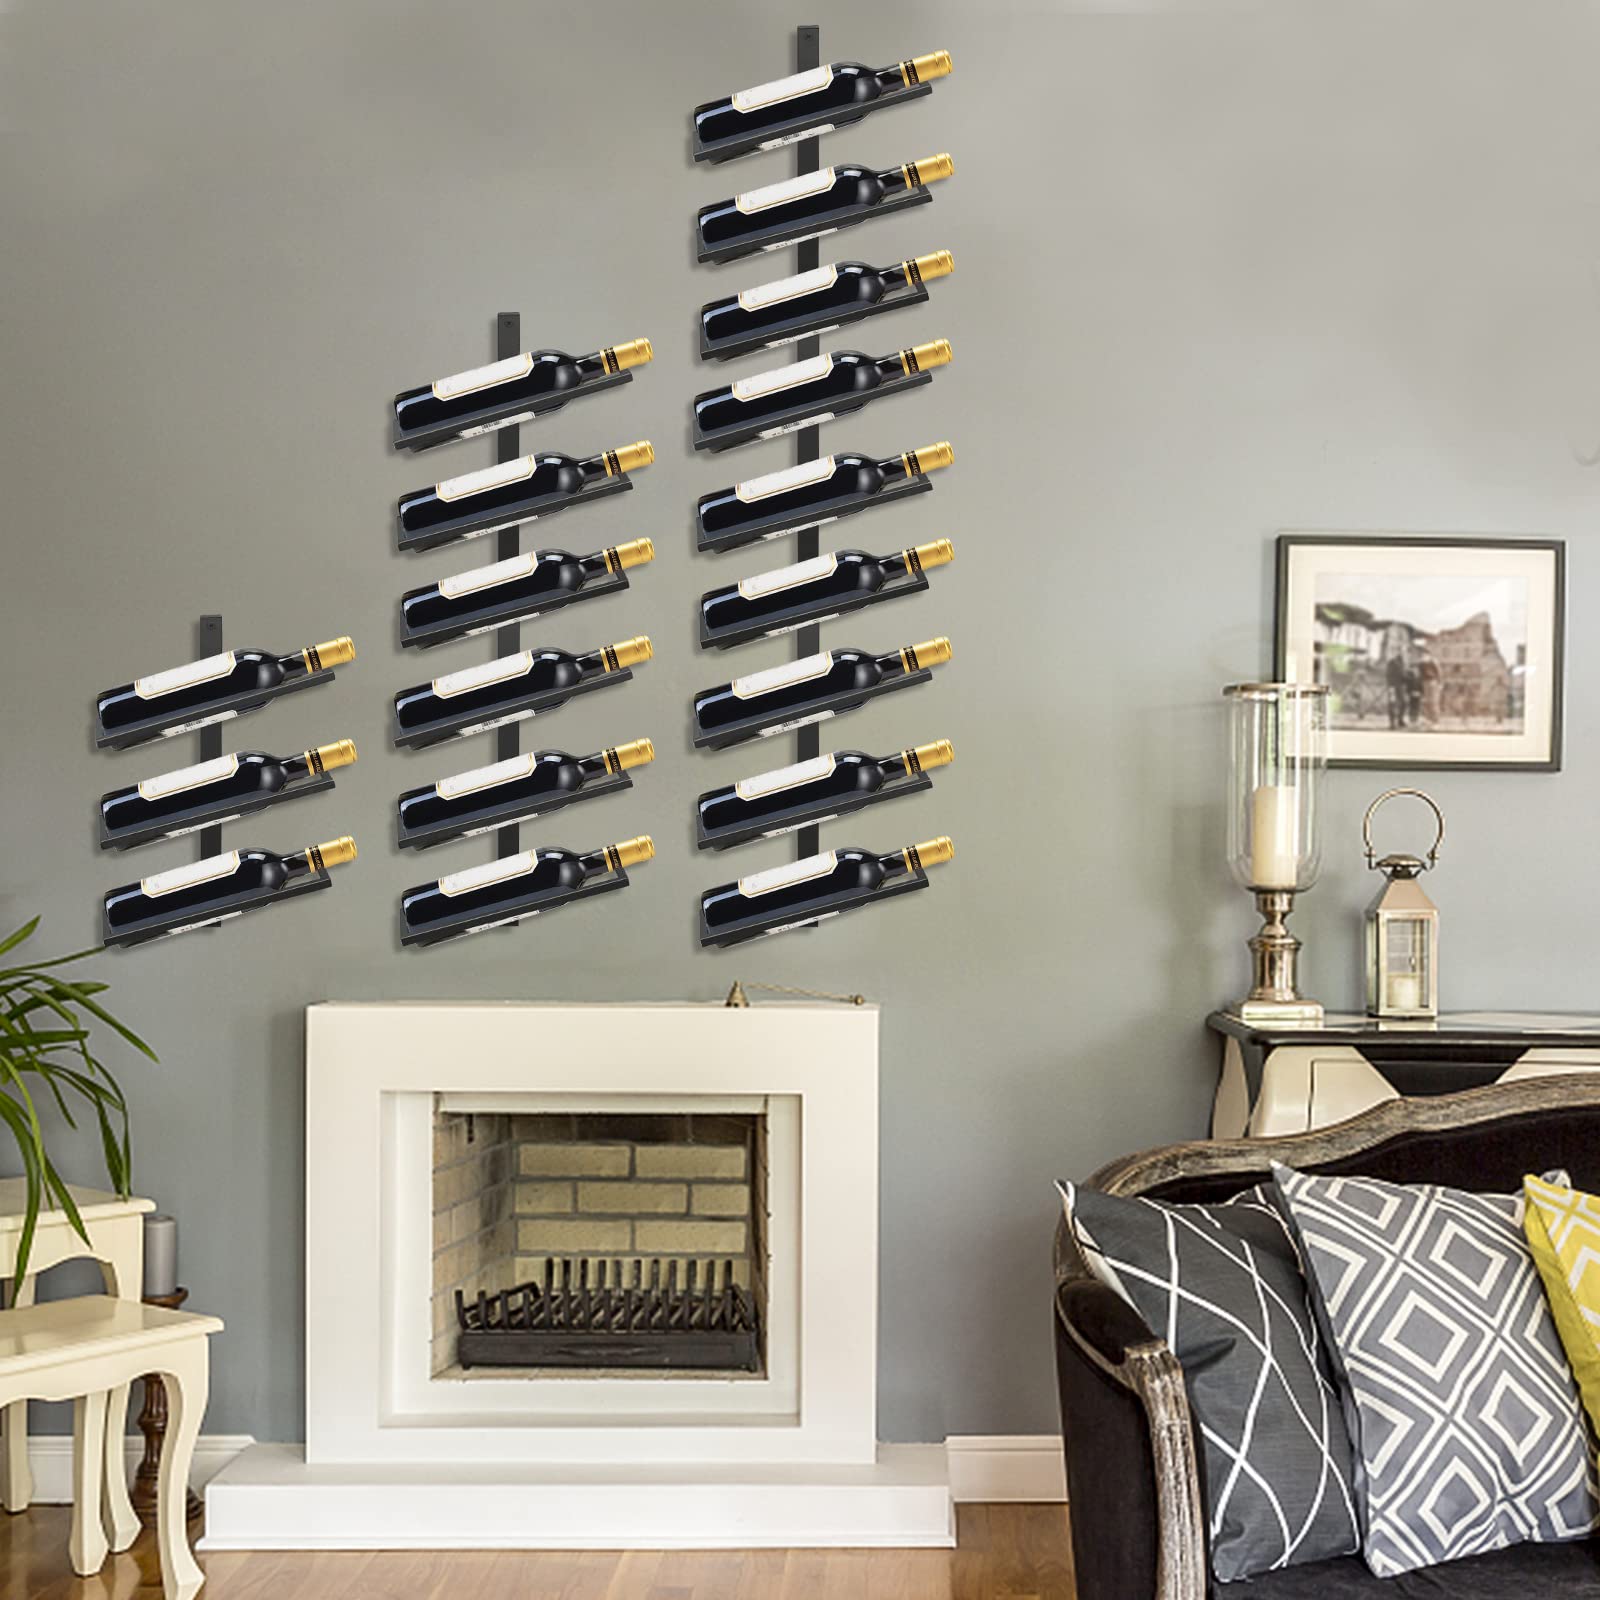 YALINKA Wall Mounted Wine Rack Holds 12 Bottles, Adjustable Separable Black Metal Hanging Wine Bottle Holder, Liquor Bottle Display Shelf for Kitchen Pantry Bar Wine Cellar